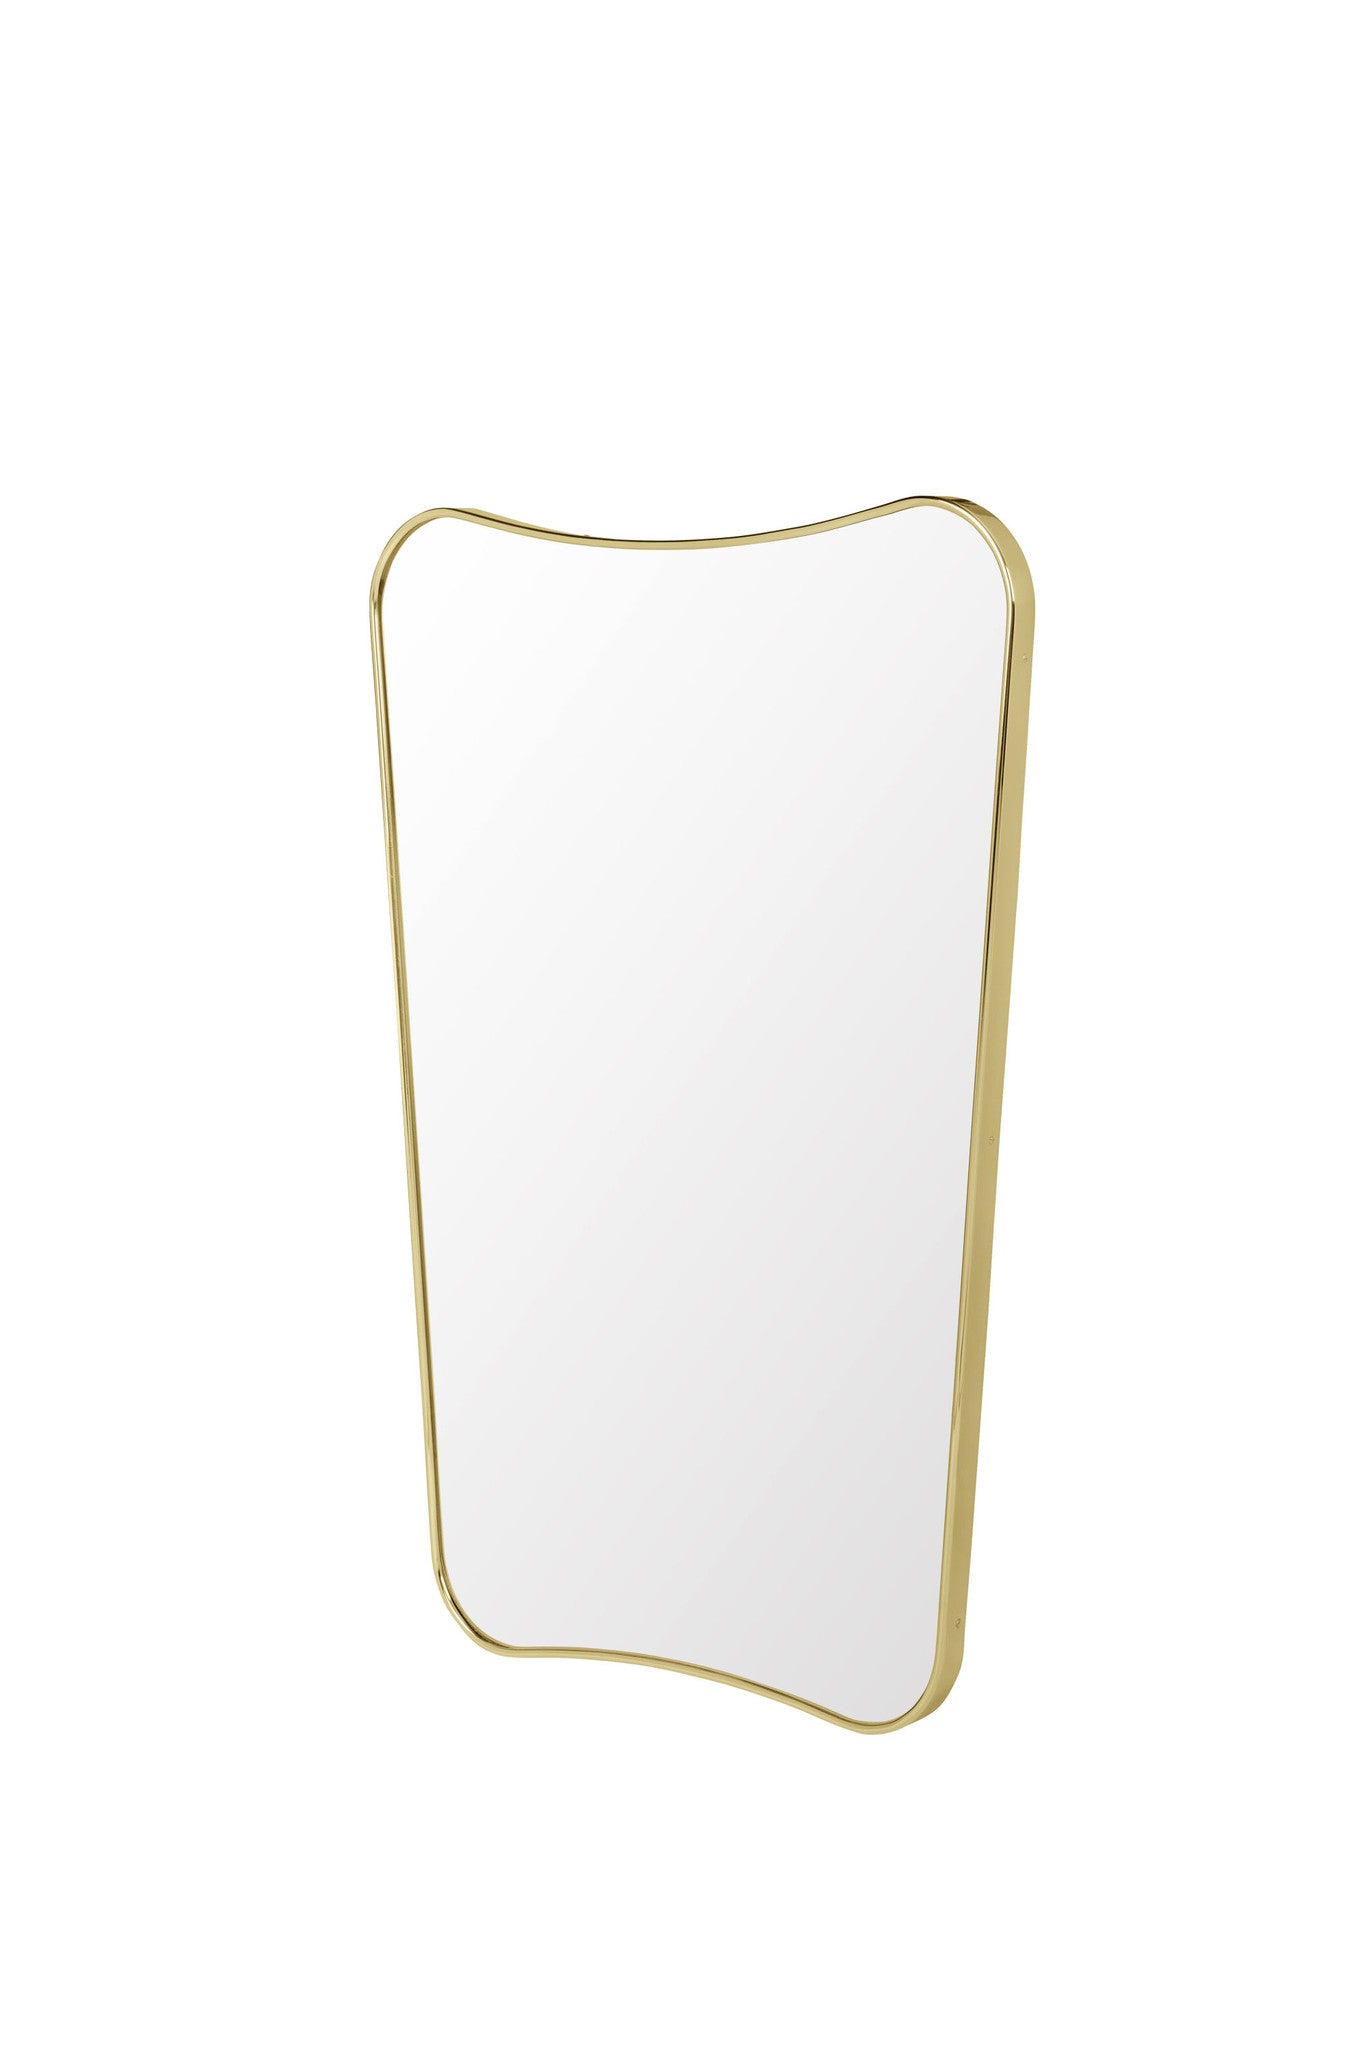 FA 33 Wall mirror, Polished Brass